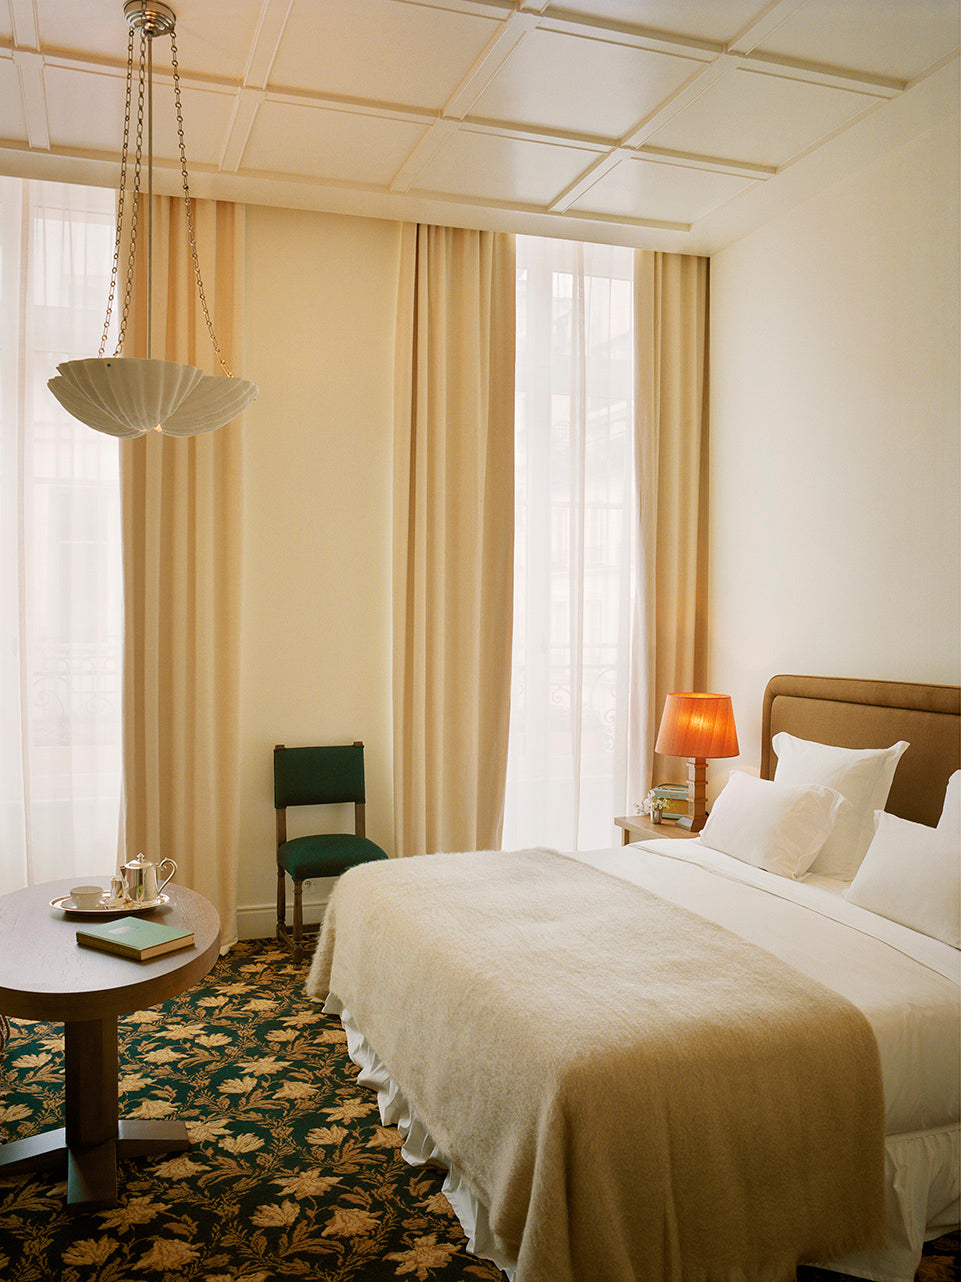 Chateau Voltaire, best Paris hotels, chic hotel design, Parisian style, travel guide on Kevin Francis Design